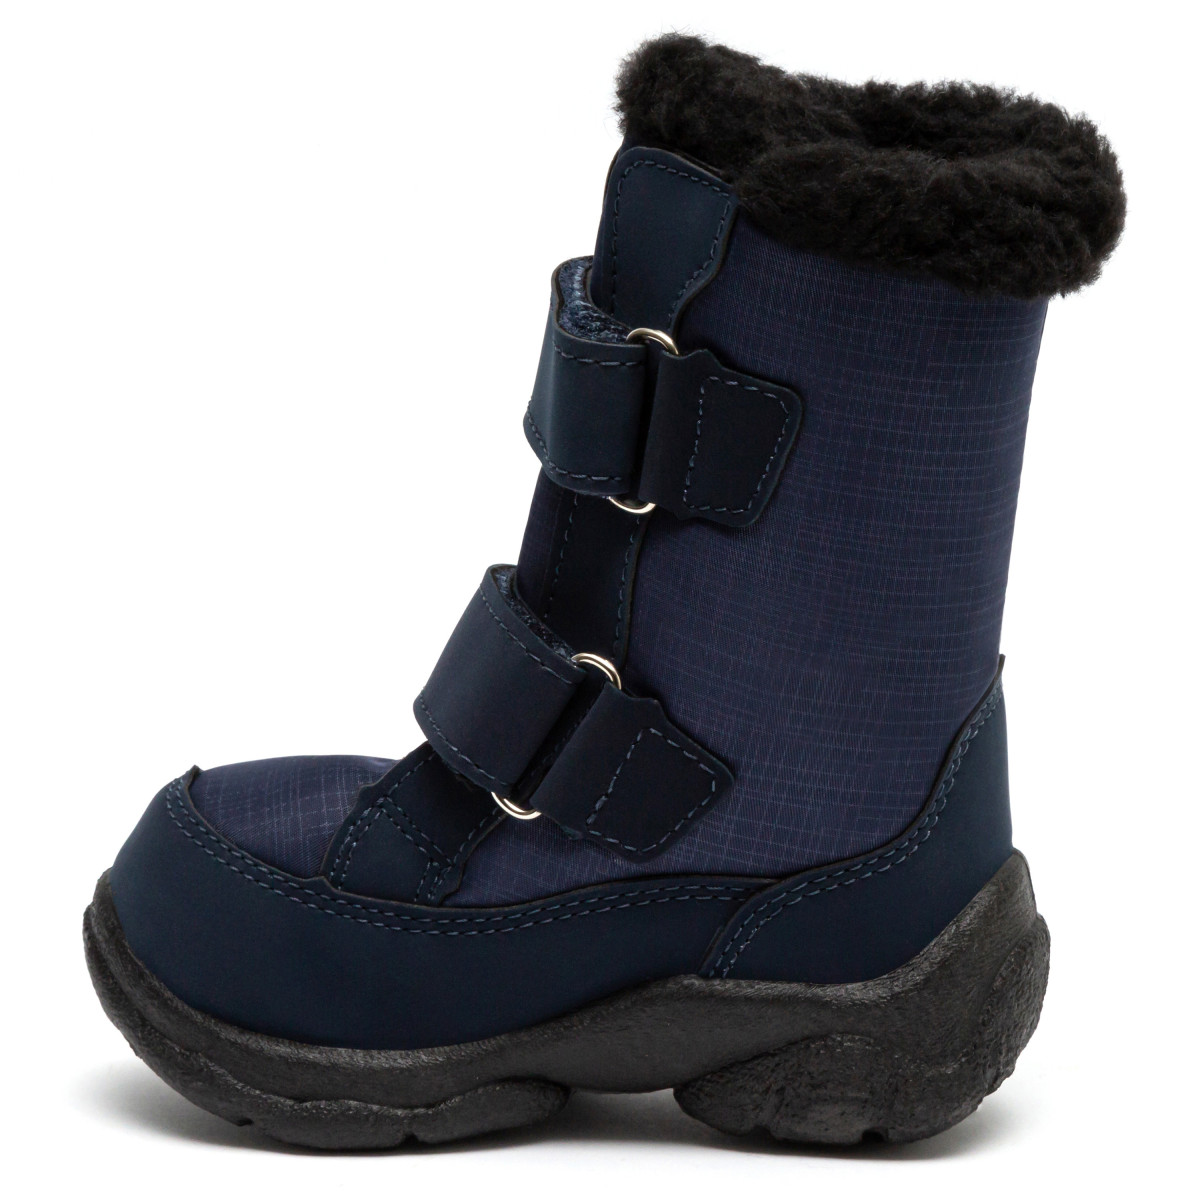 get nervous trap Communist Cumpara online cizme de iarna copii ALASKA, Navy - OLDCOM